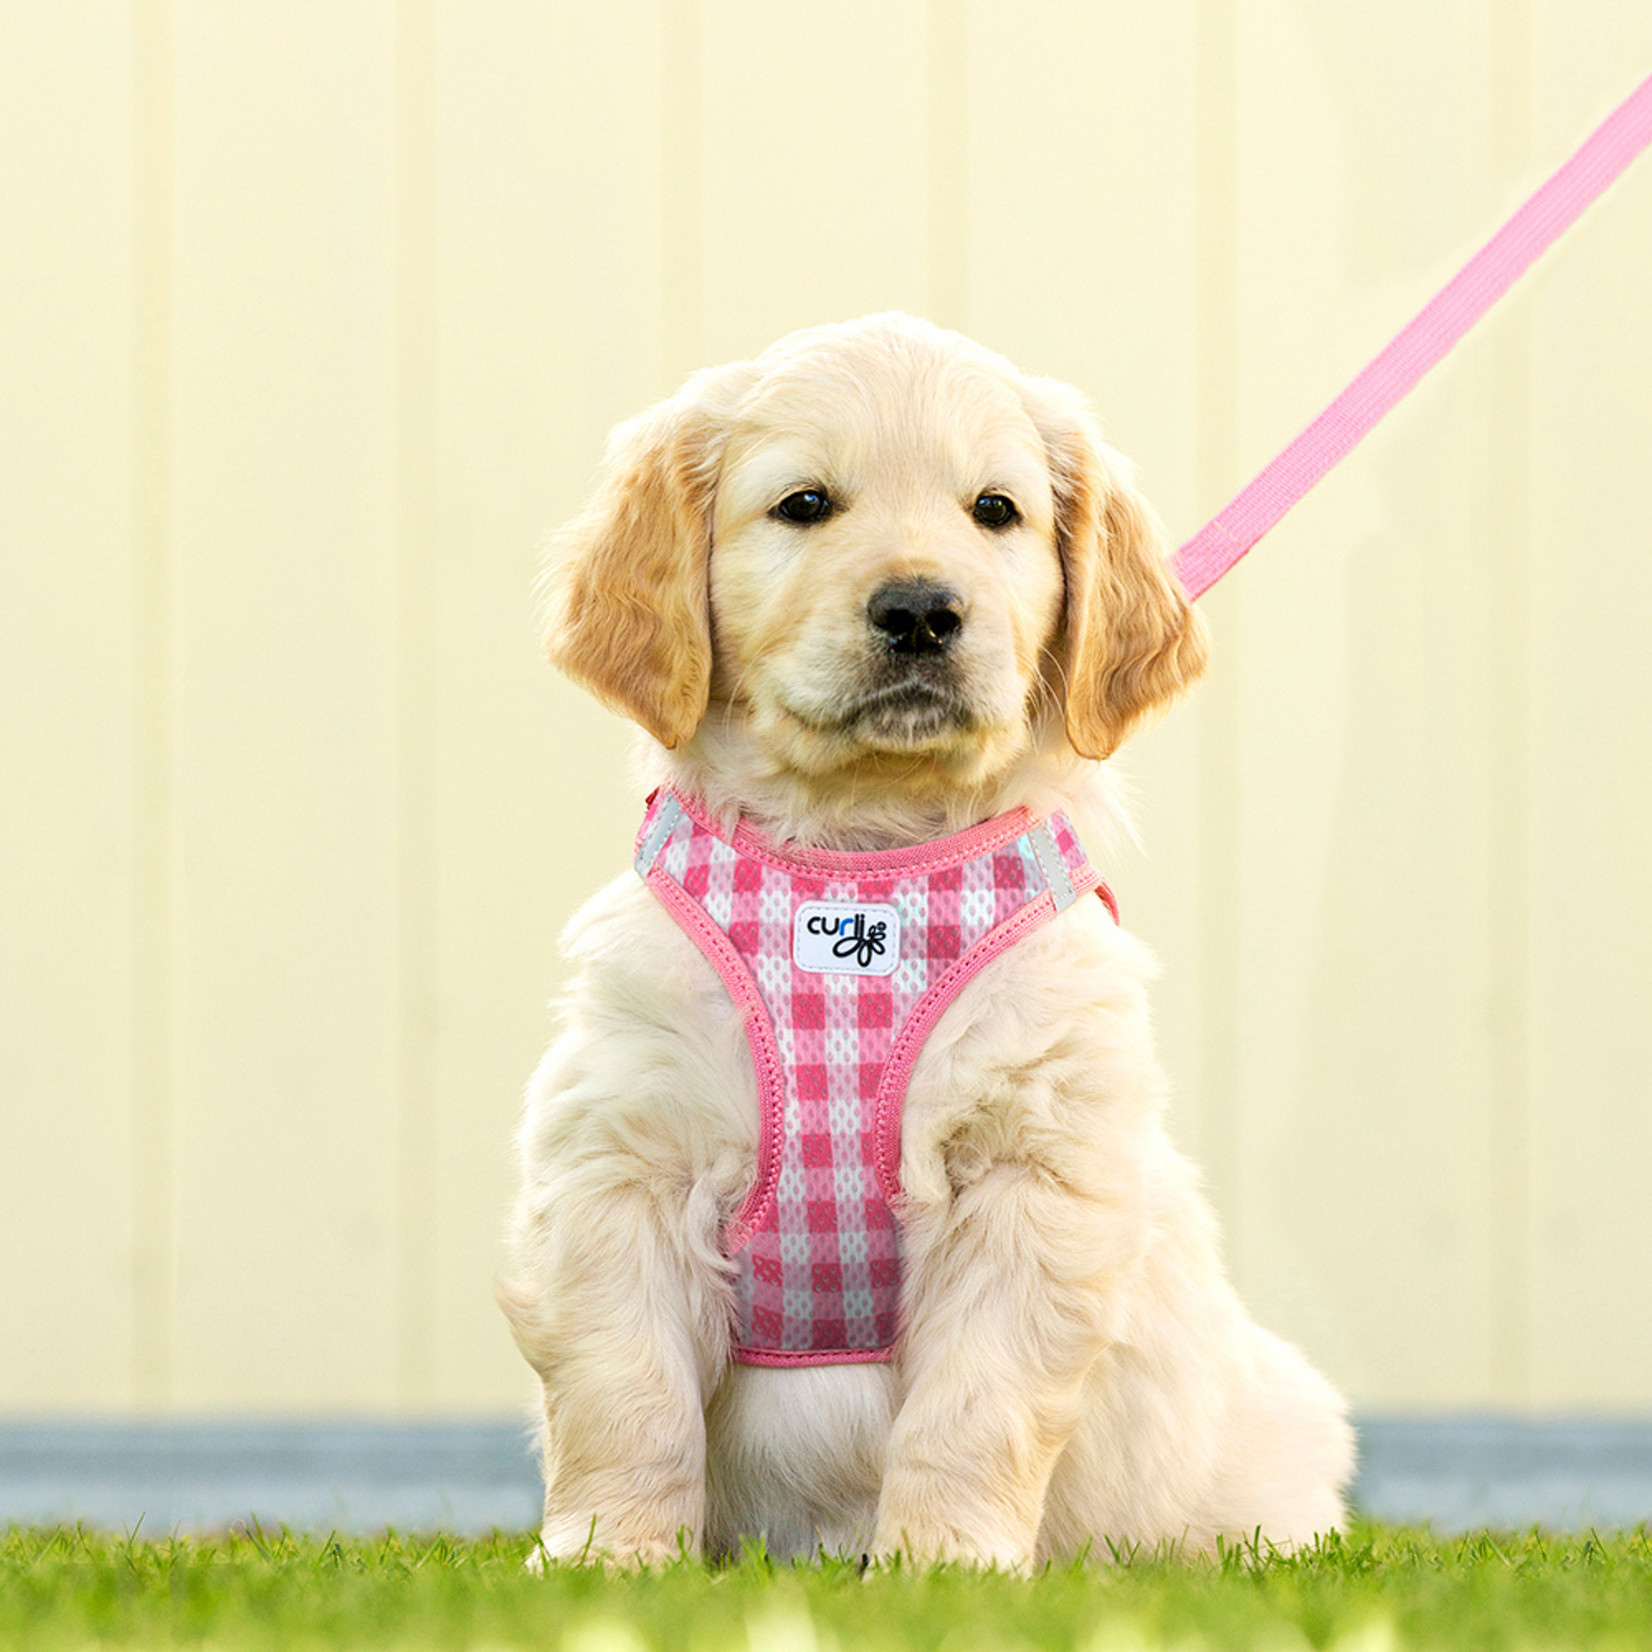 Curli puppy Vest Harness & leash pink